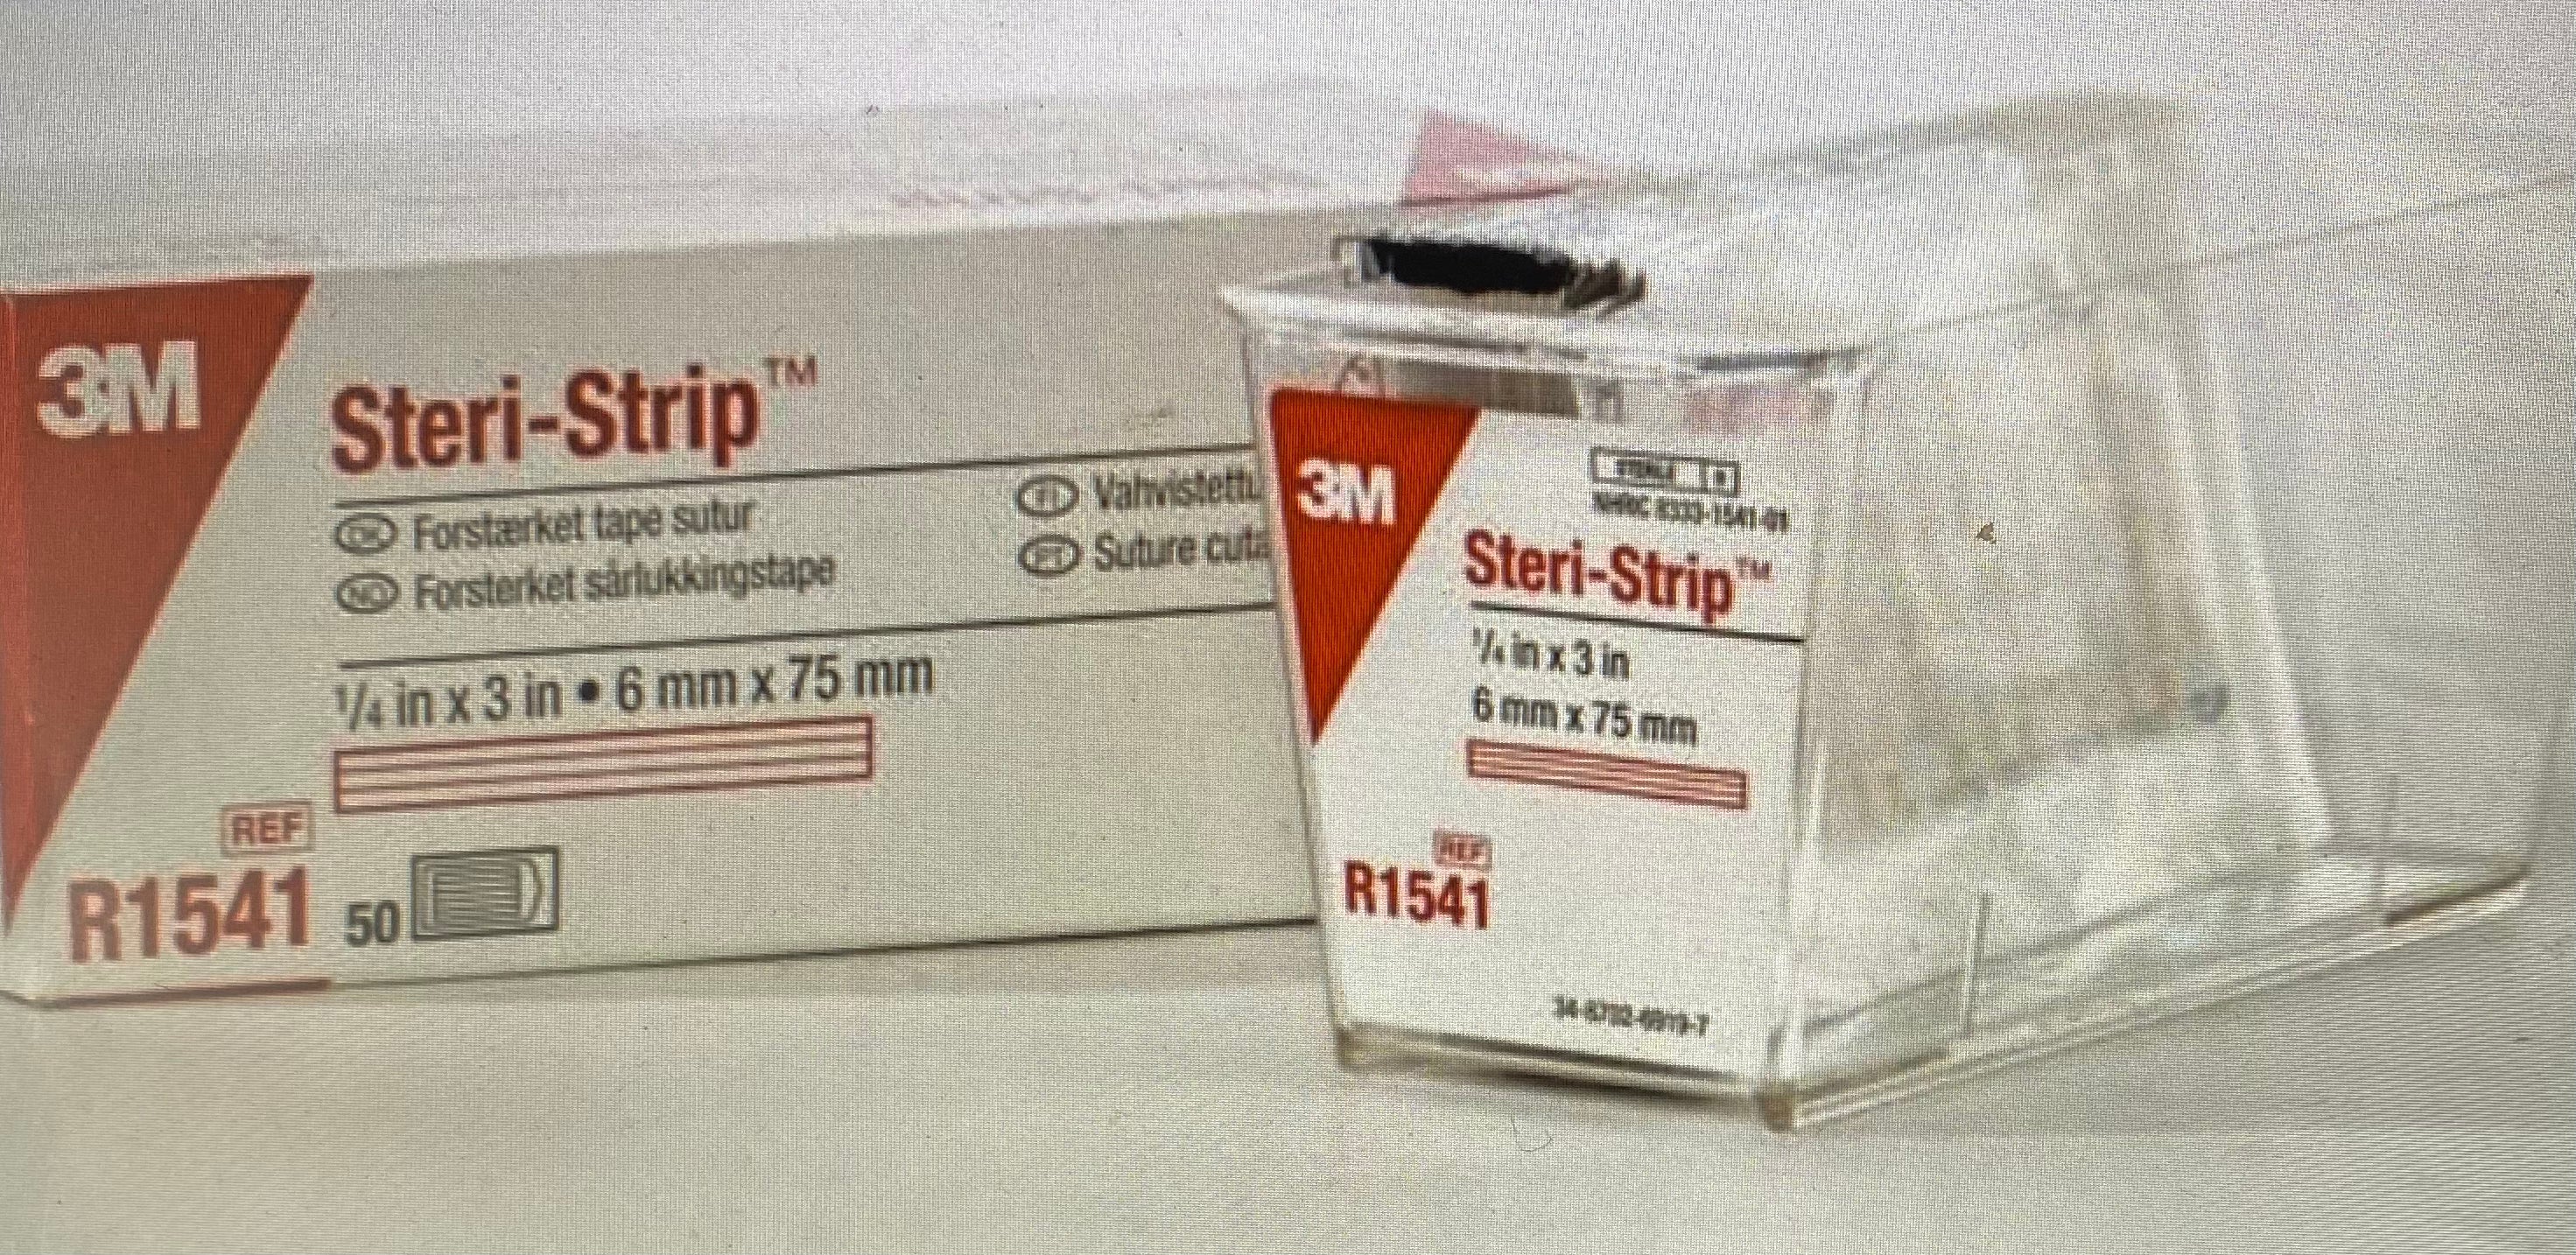 3m Steri Strip Skin Closure - 1 x 5 - 4/Envelope - PACK OF 5